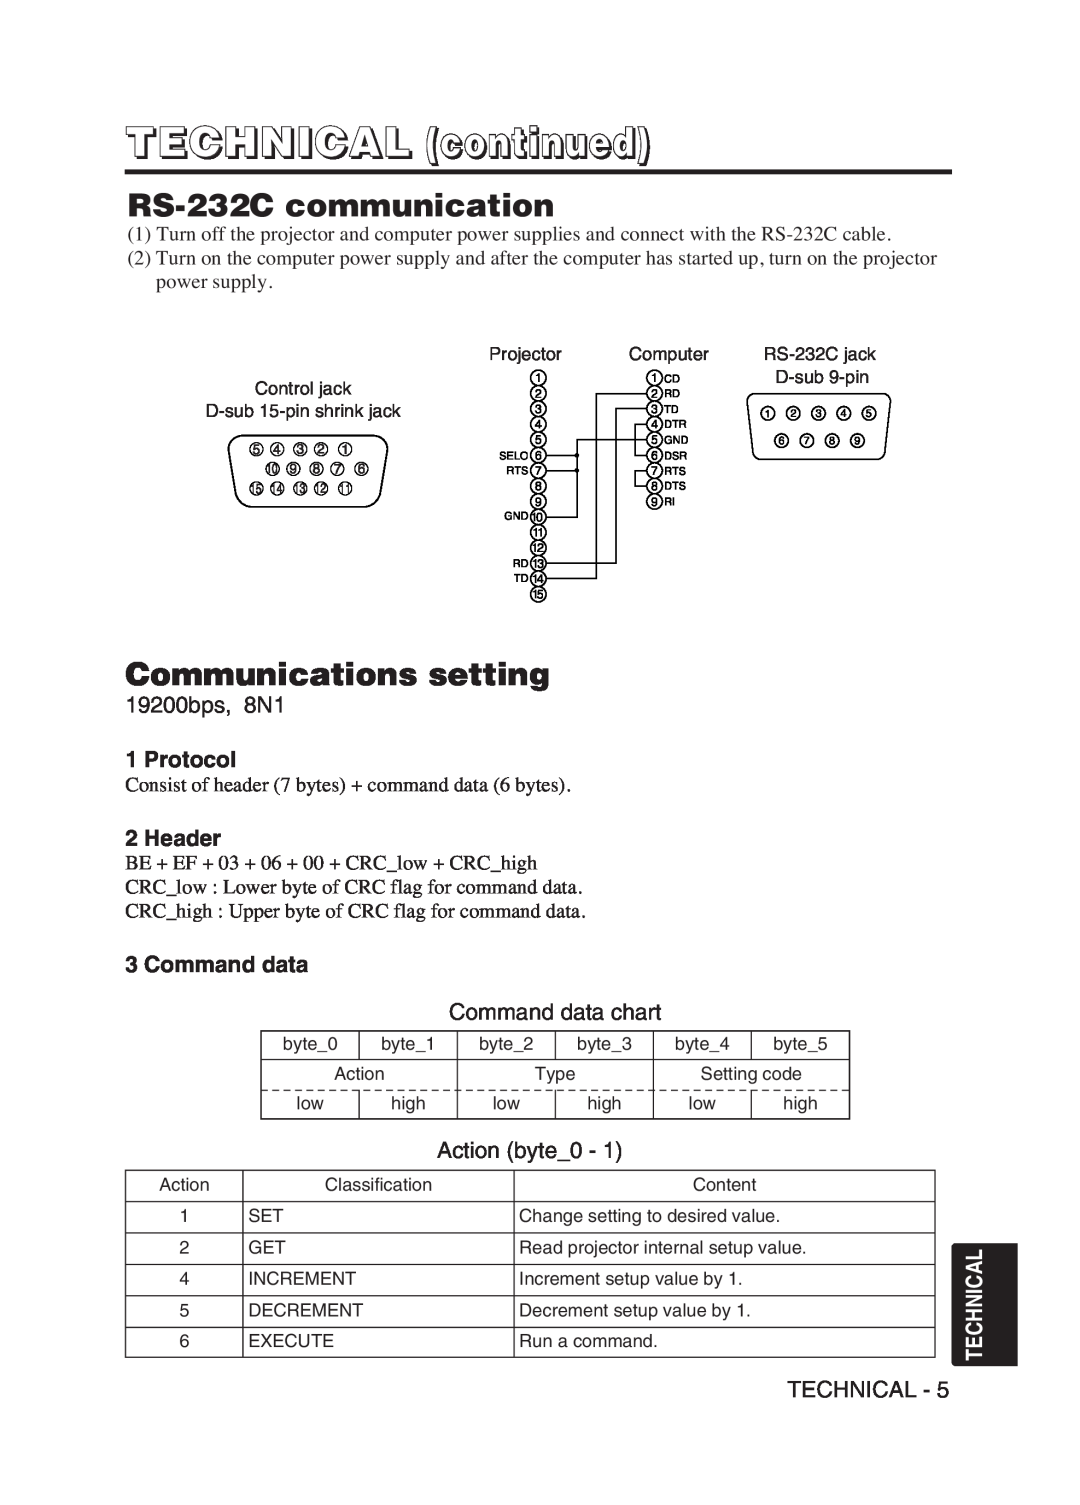 Hitachi CPS225W user manual RS-232C communication, Communications setting, 162738495, Protocol, Header, Command data 